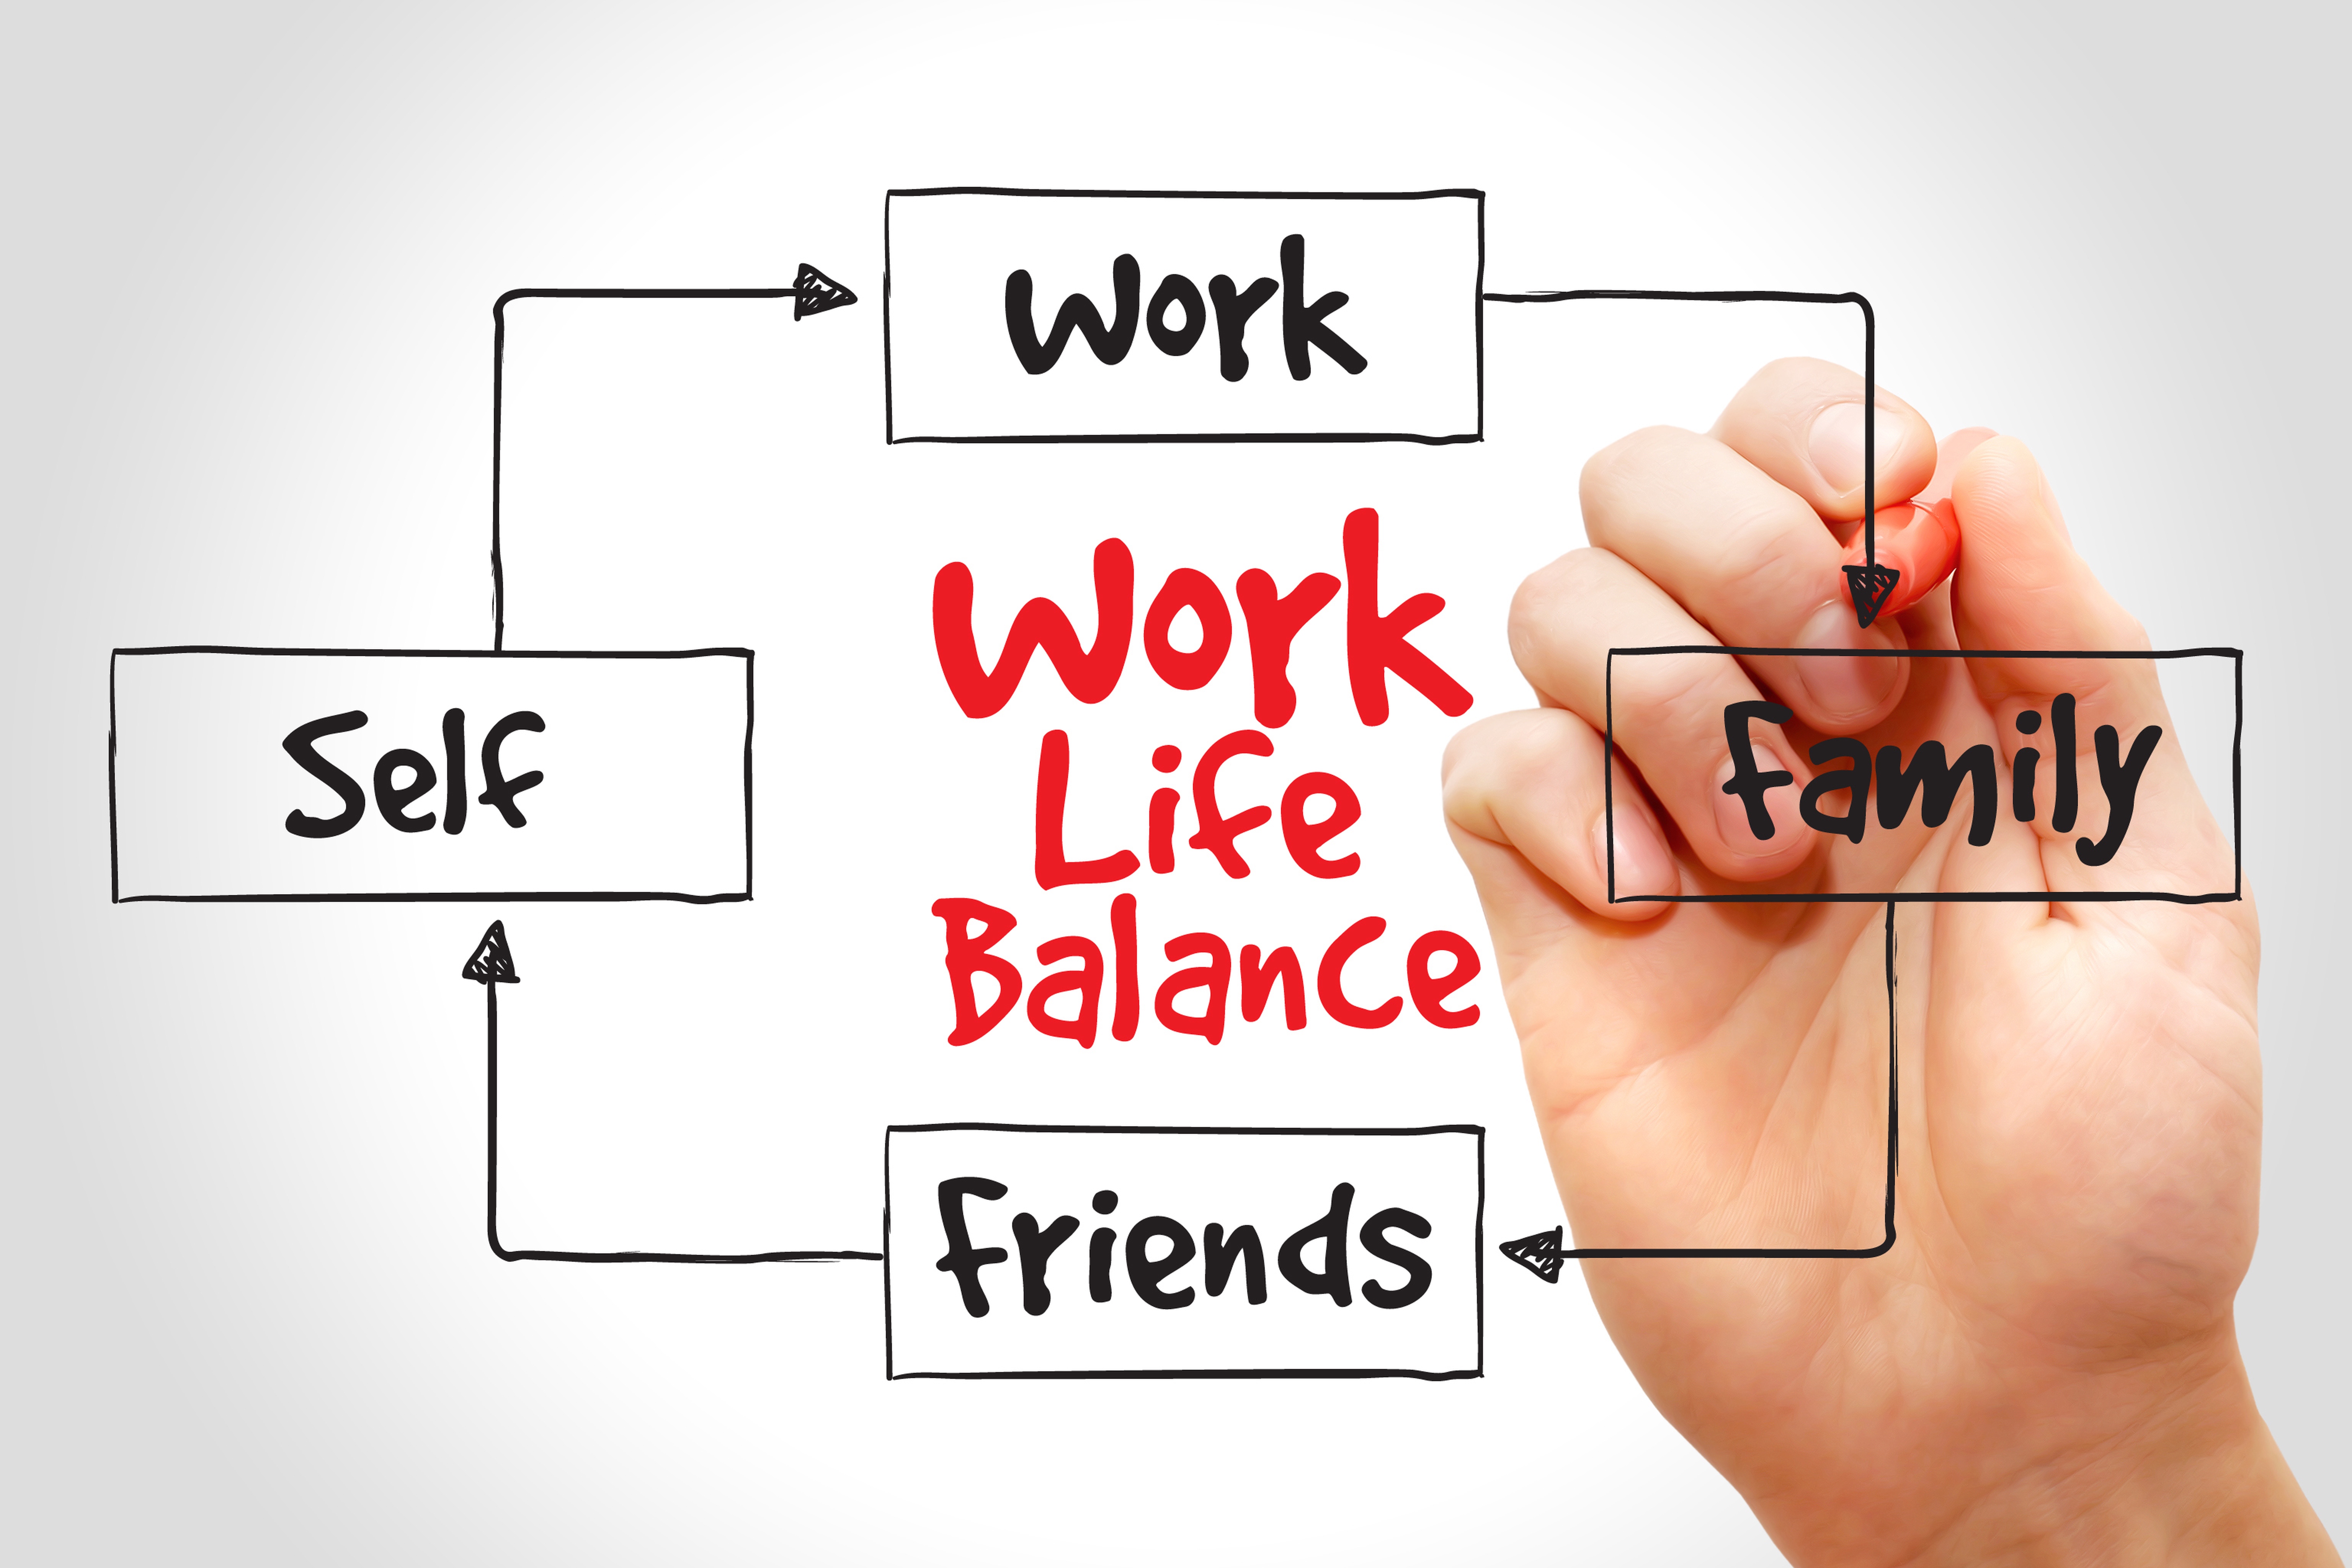 Work part of life. Work-Life Balance. Working Life Balance. Баланс между работой и жизнью. Work Life Balance мотивация.